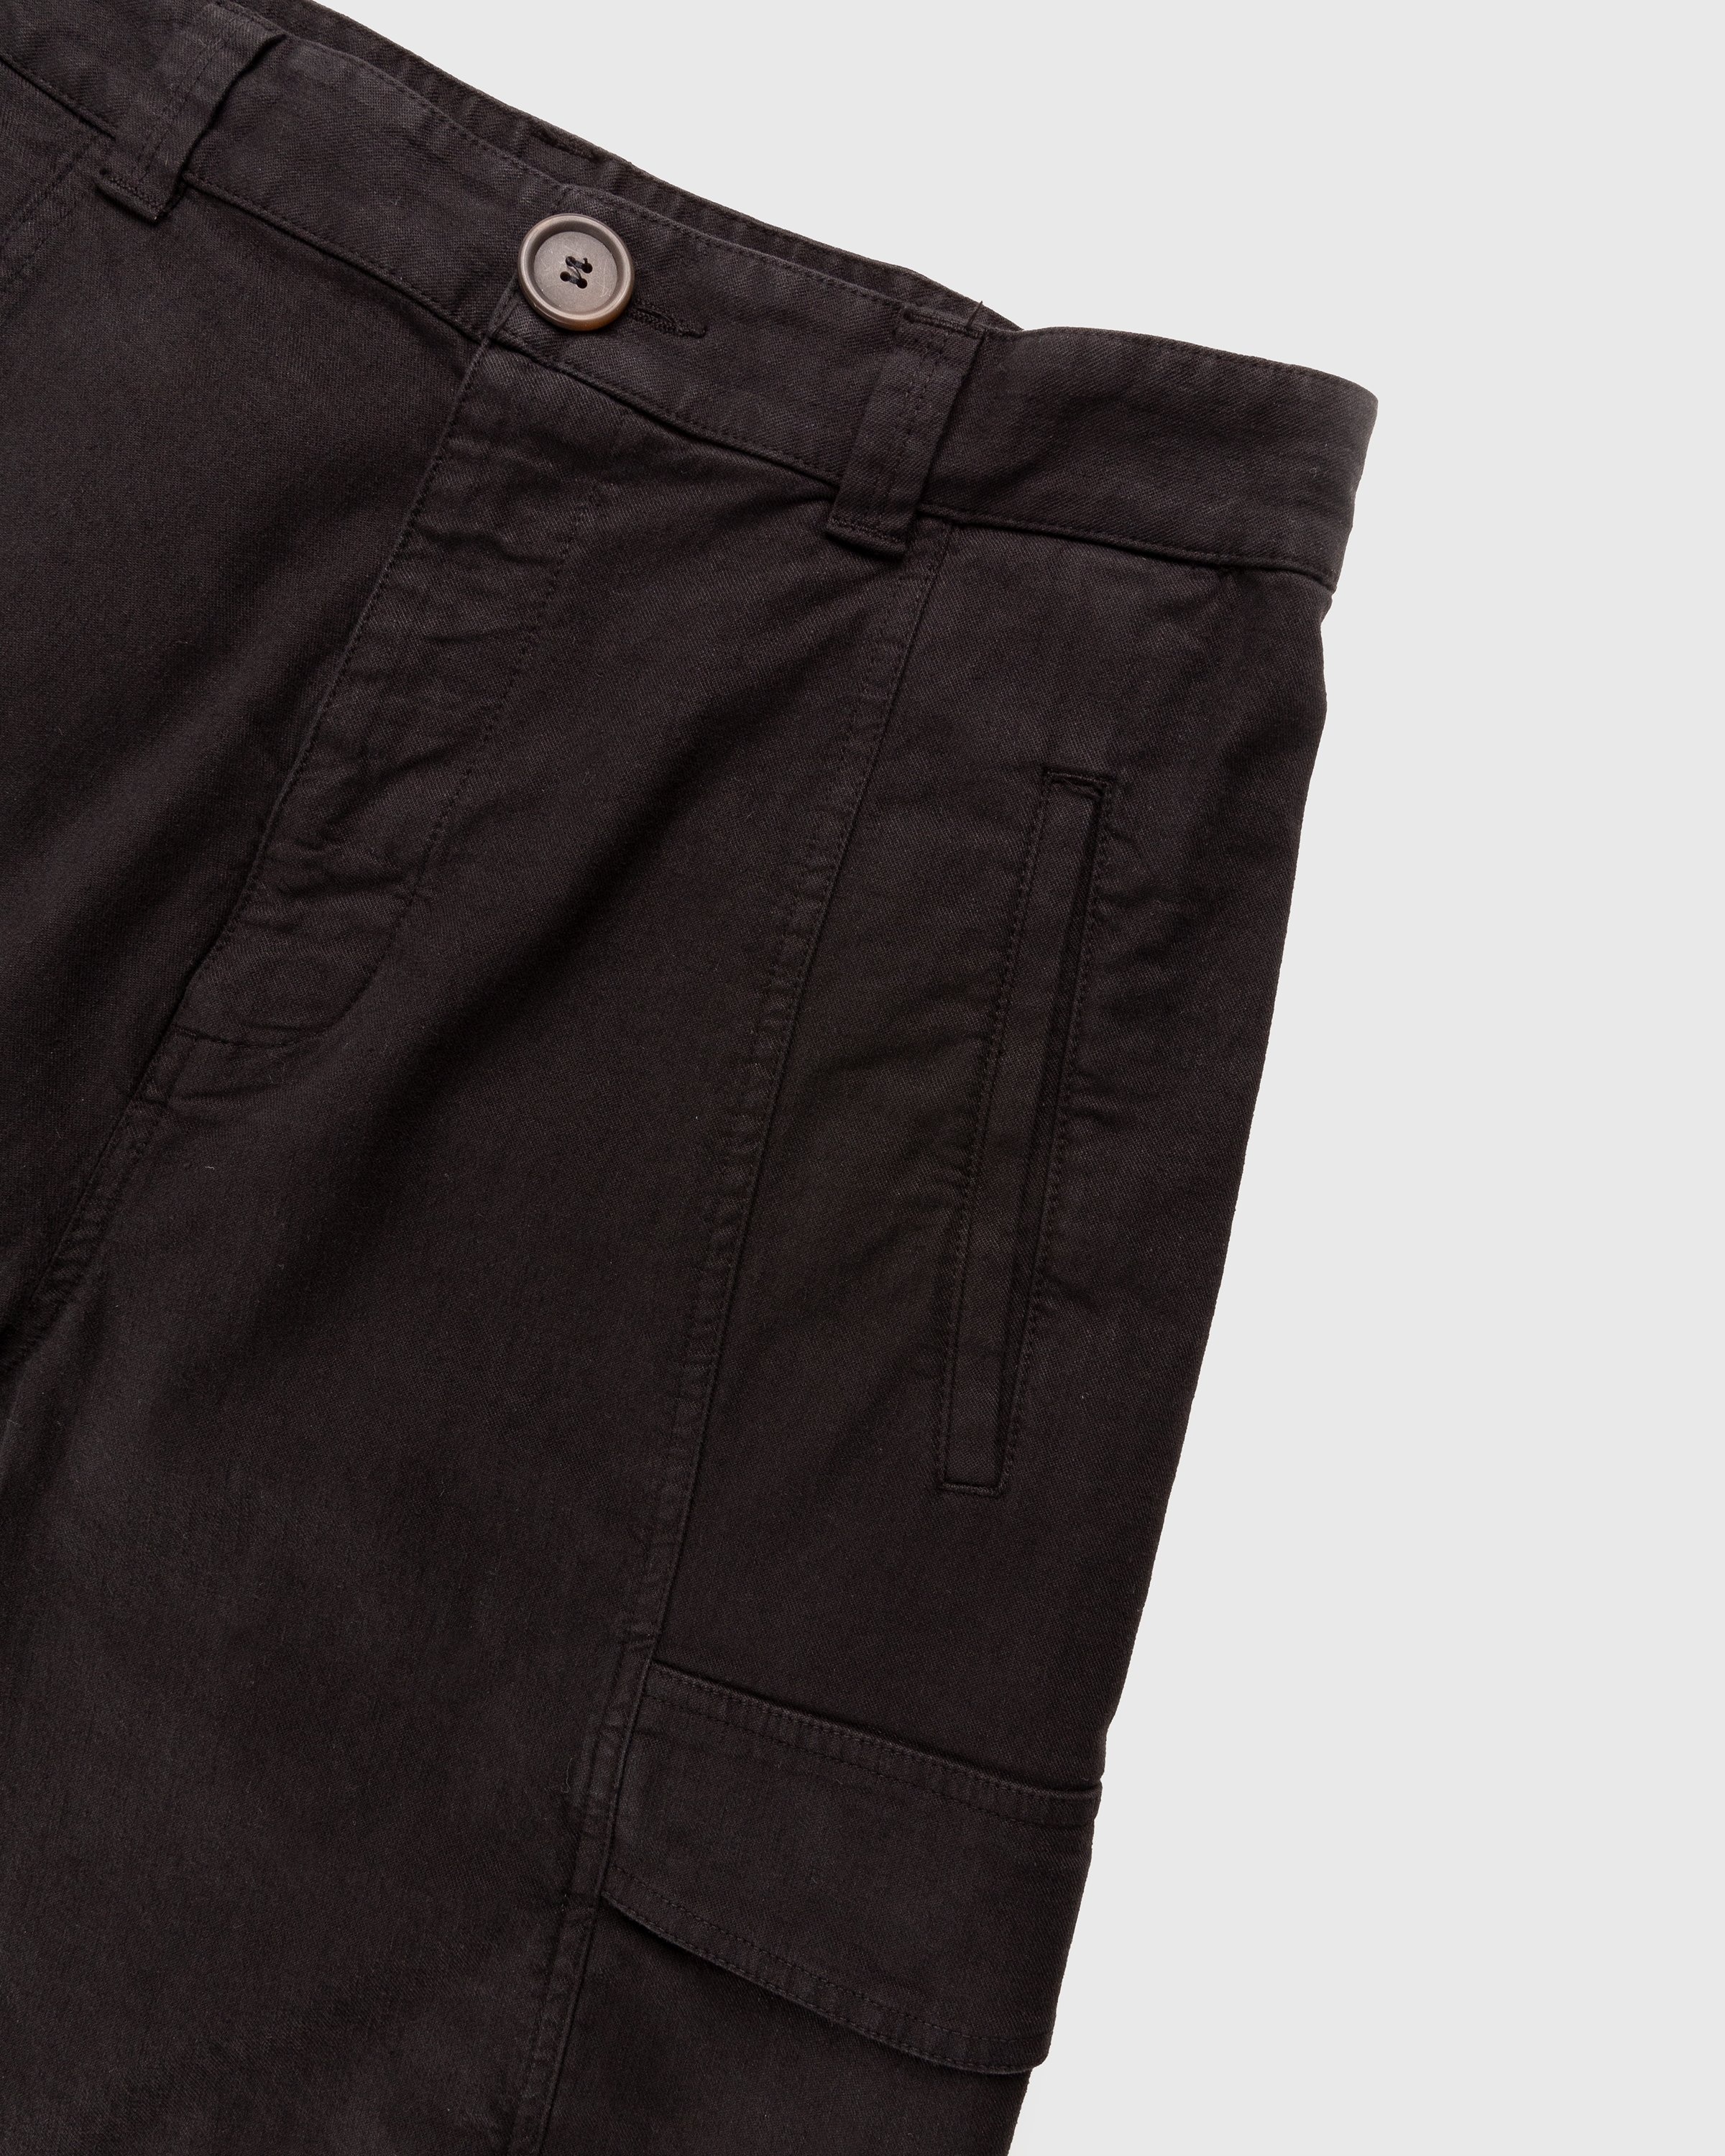 Winnie New York – Linen Cargo Shorts Black - Shorts - Black - Image 4